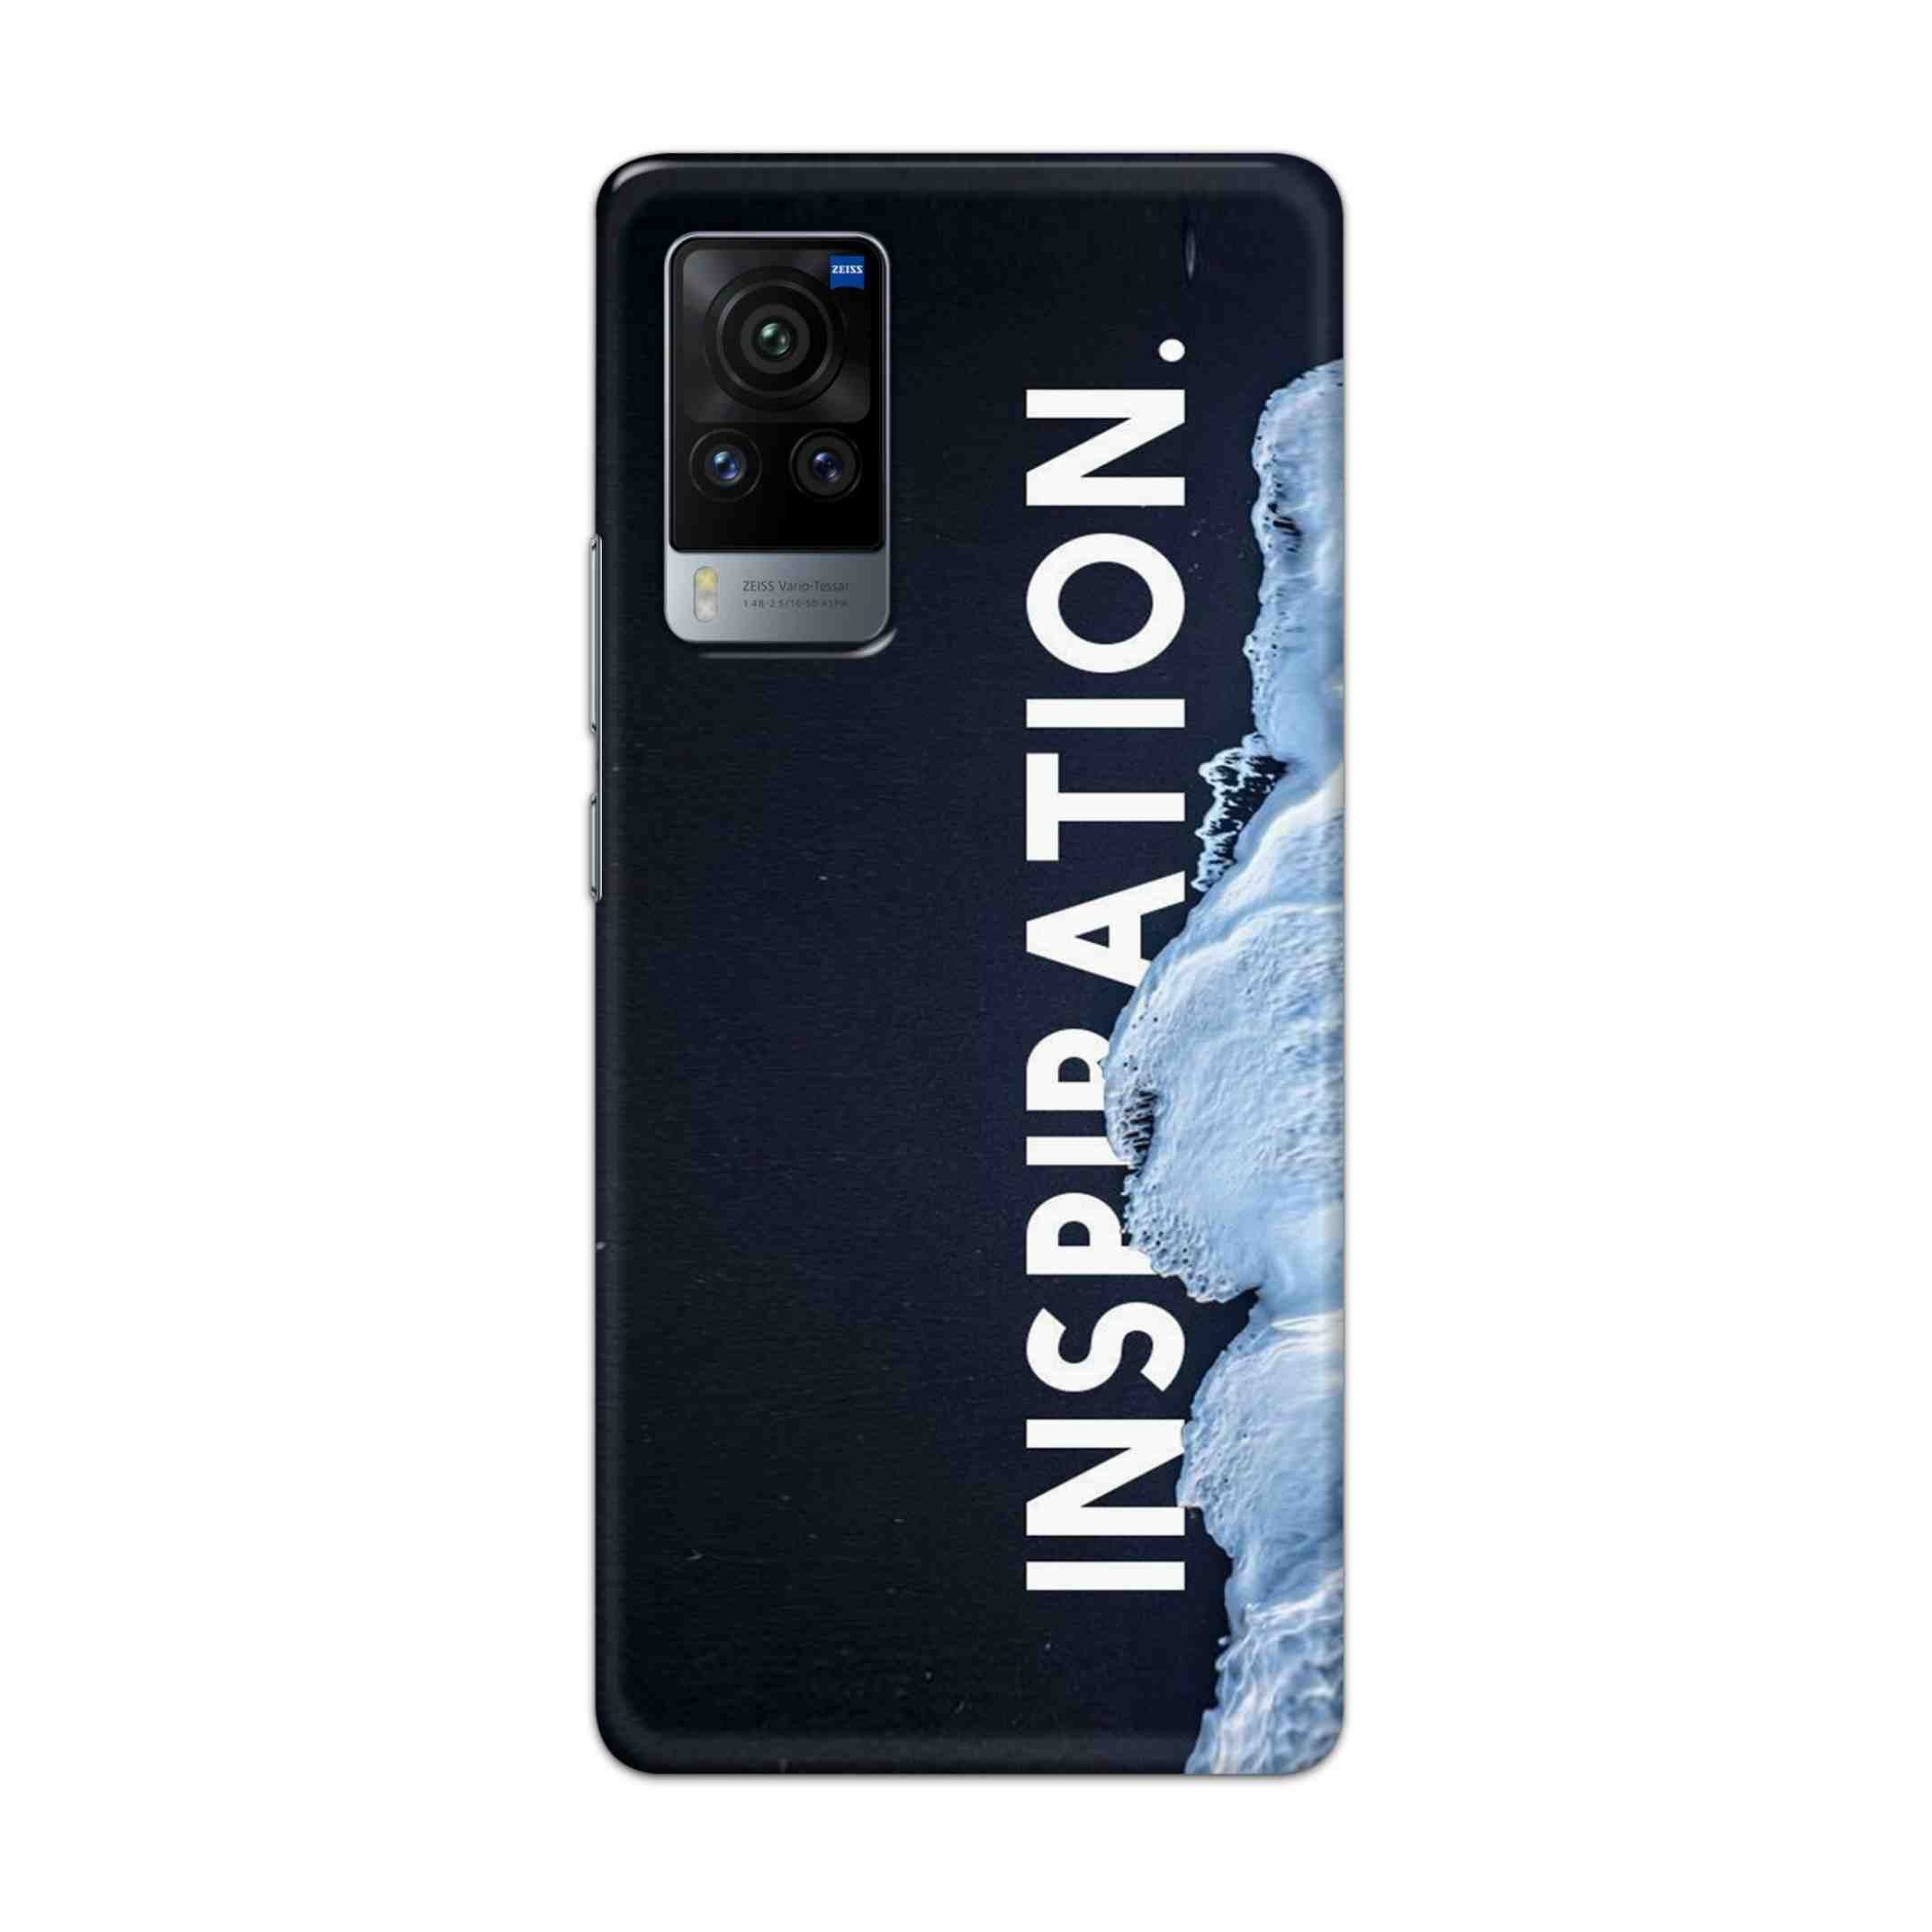 Buy Inspiration Hard Back Mobile Phone Case Cover For Vivo X60 Pro Online